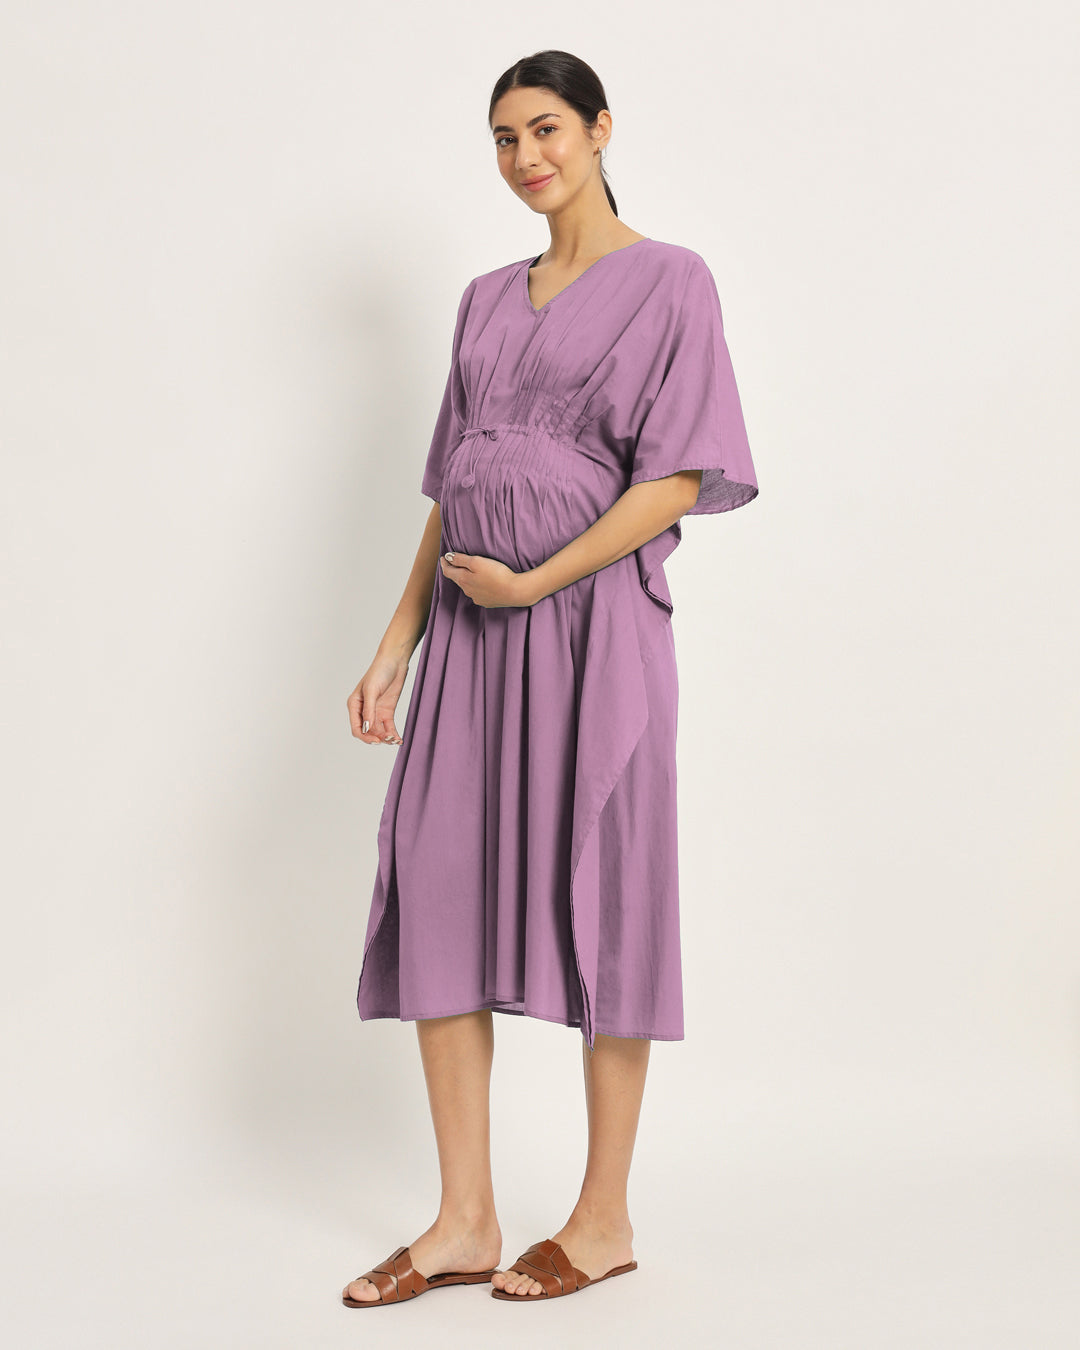 Combo: Iris Pink & Plum Passion Mommy Mode Maternity & Nursing Dress